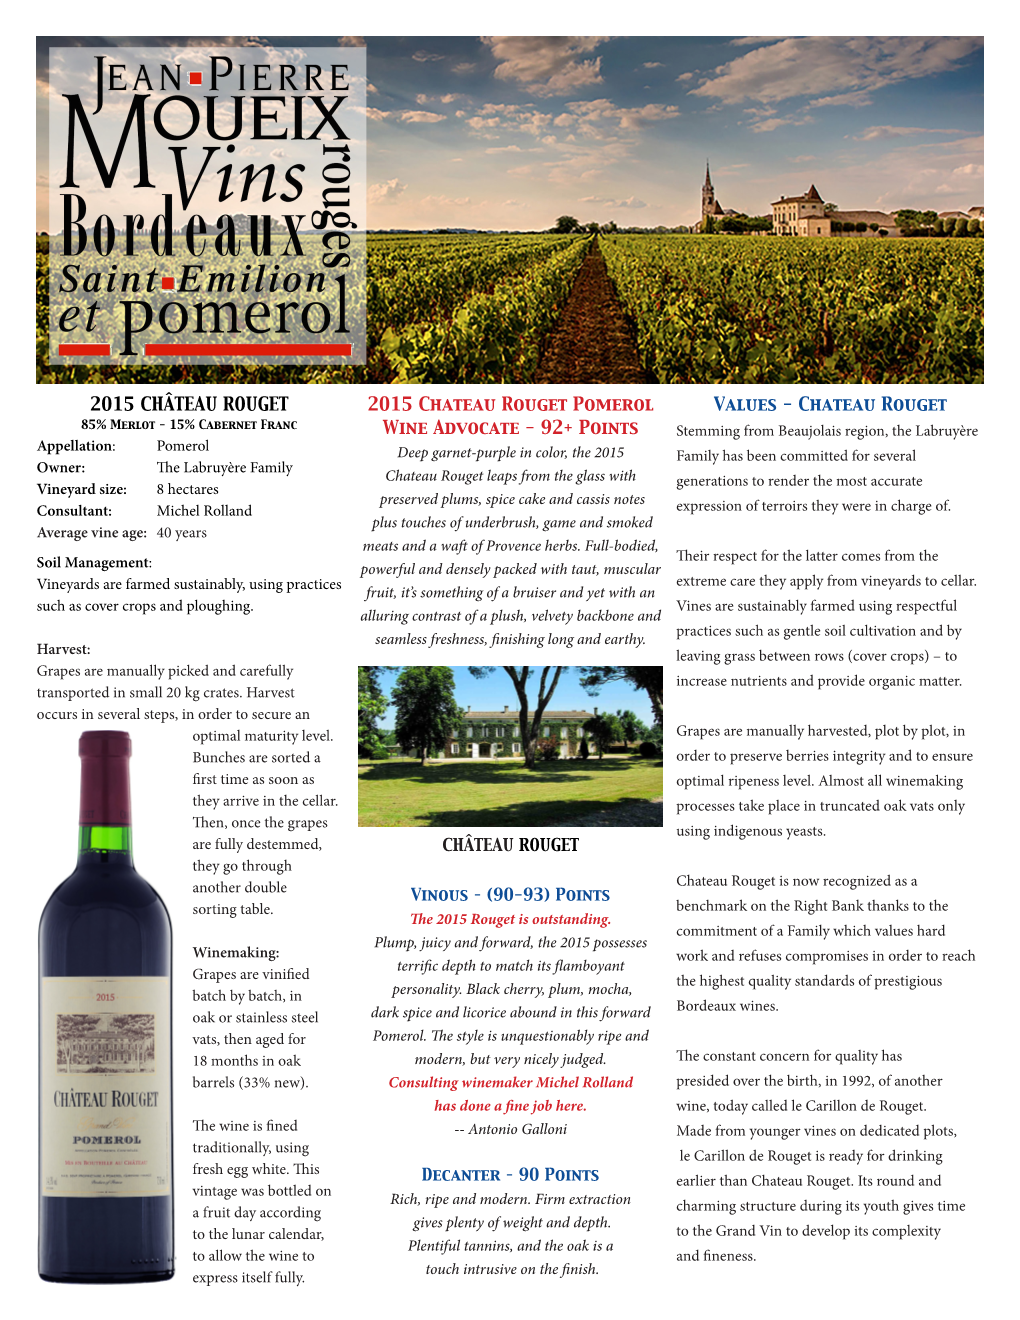 2015 Chateau Rouget Pomerol Wine Advocate